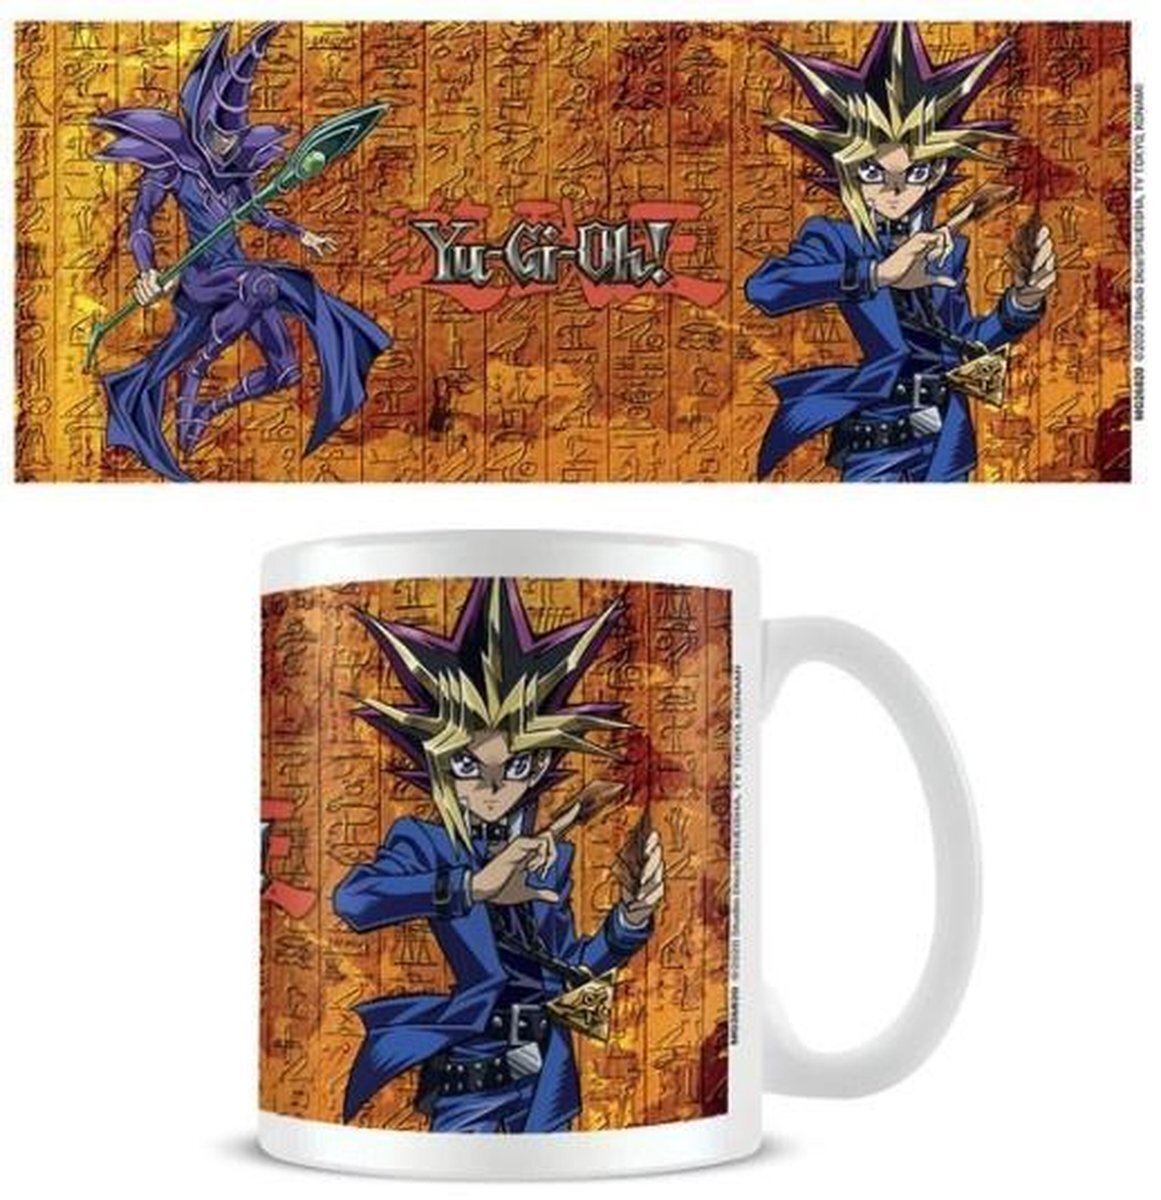 Hole in the Wall Yu-Gi-Oh! - Yami & Dark Magician Mug Merchandise